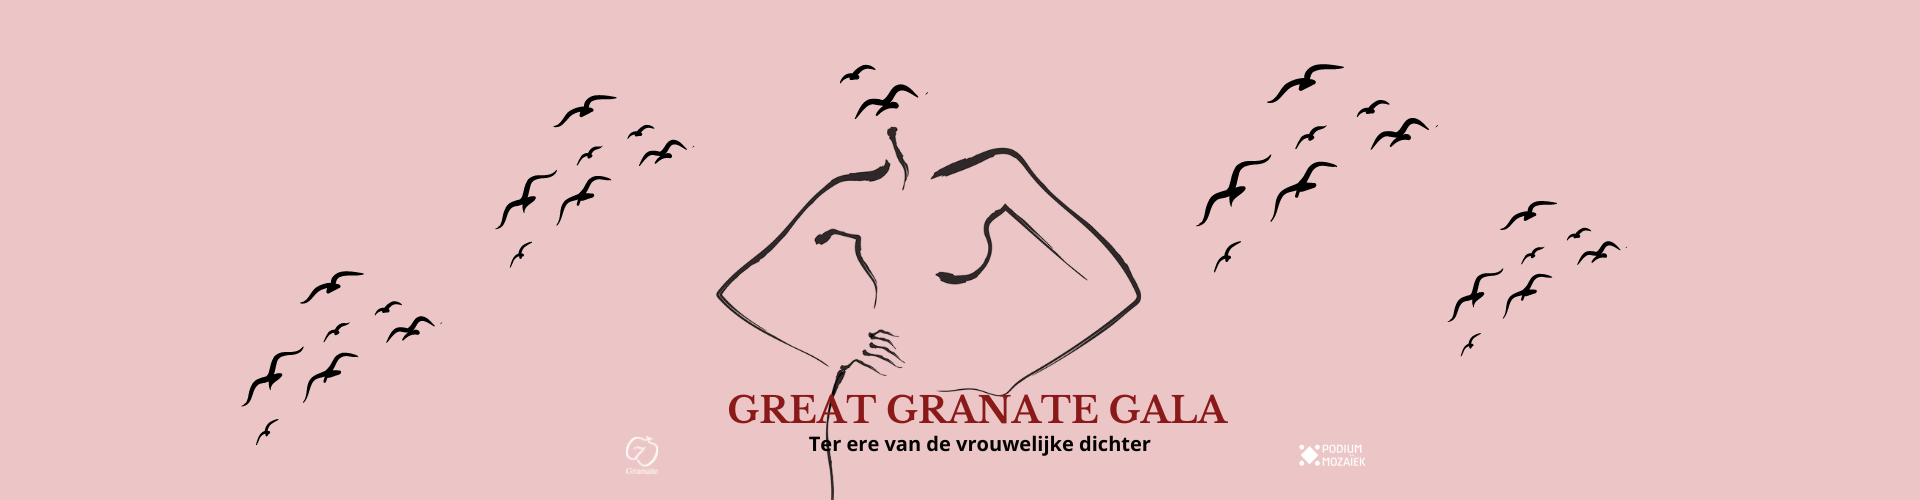 Great Granate Gala